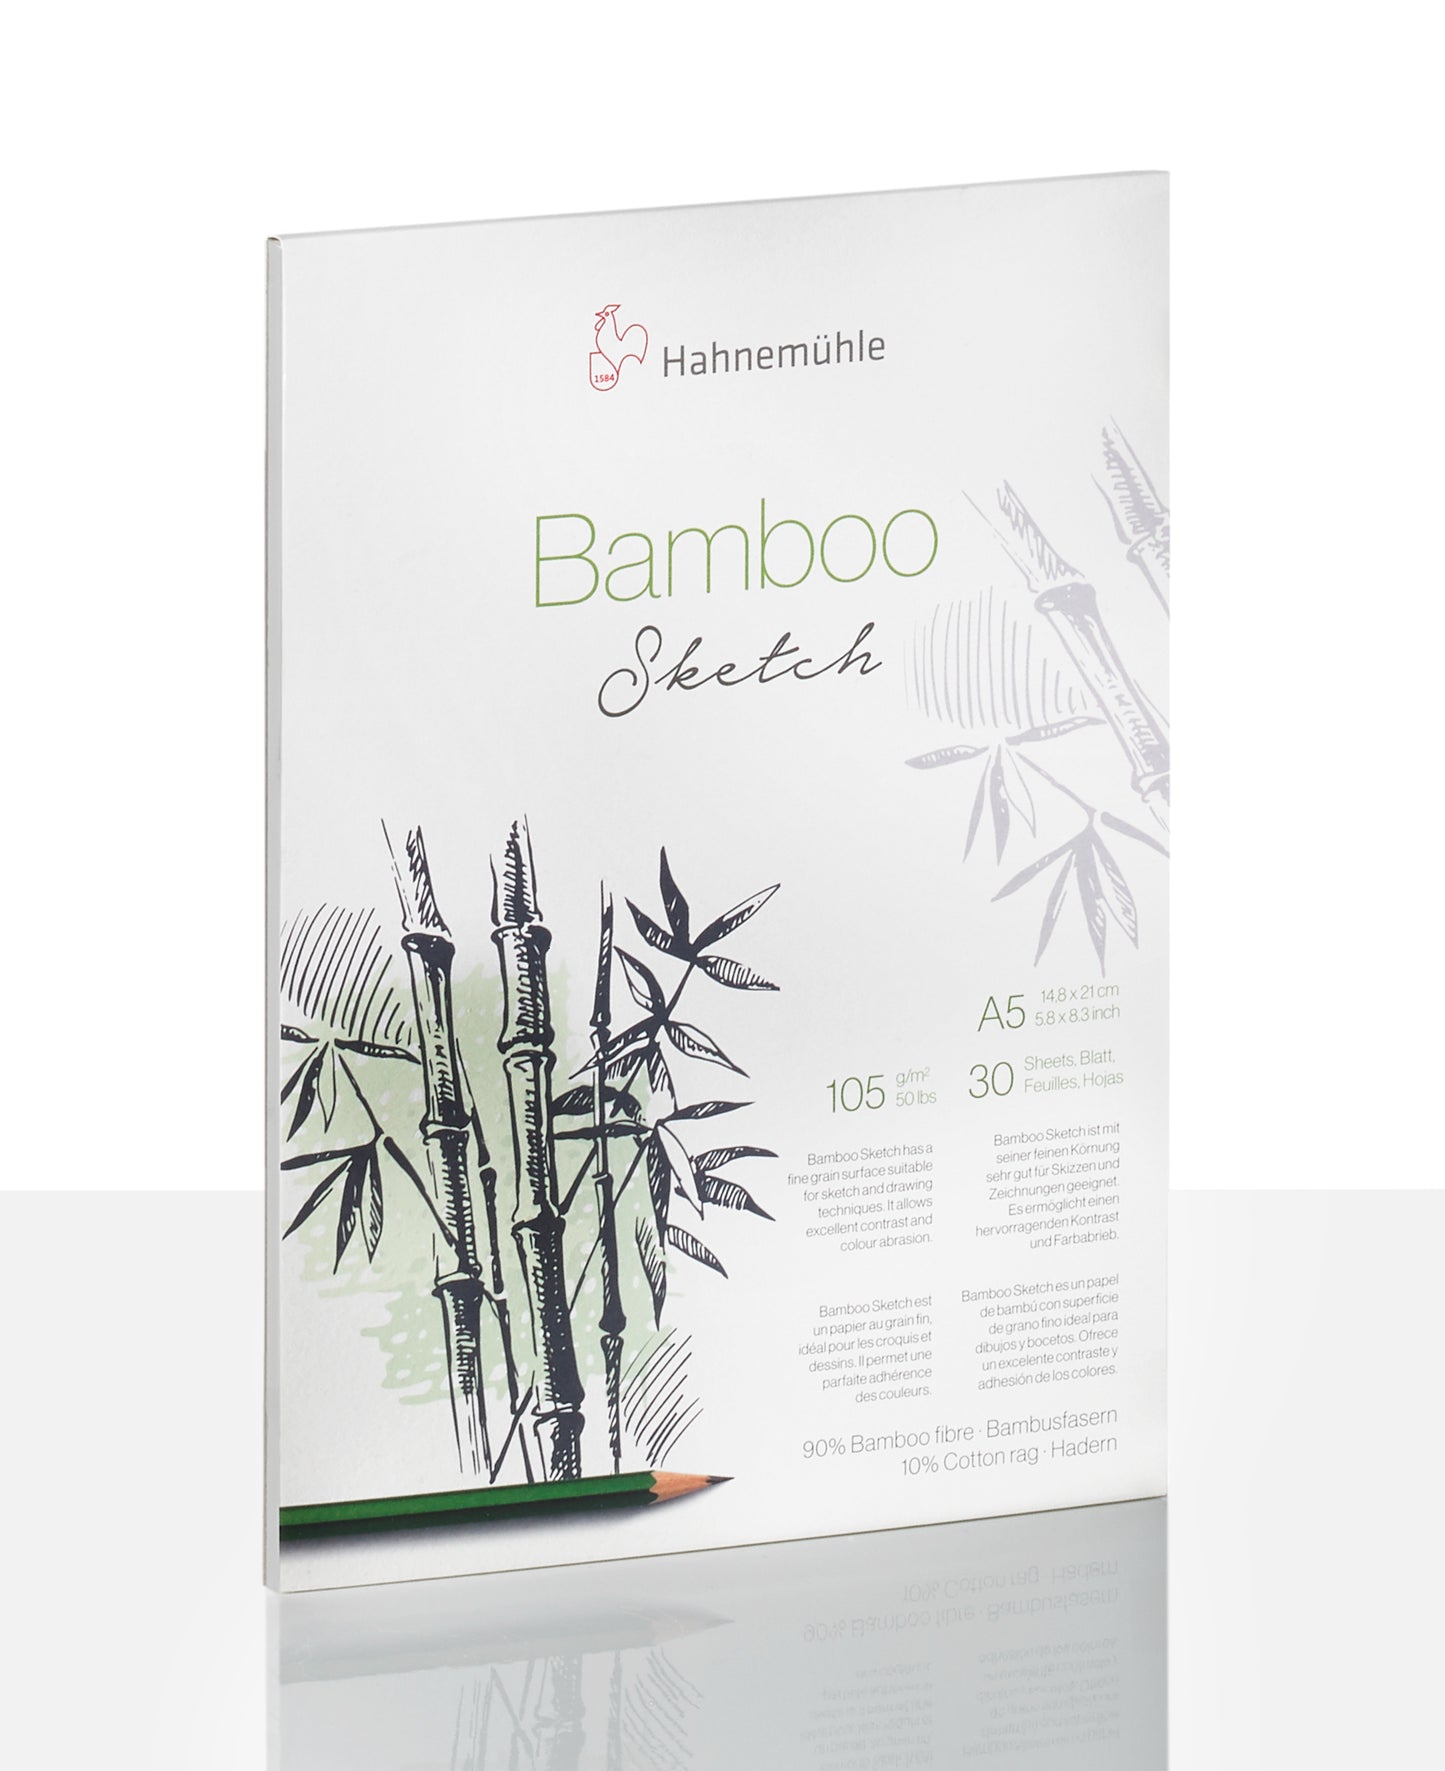 Blocs de dibujo de bambú de Hahnemuhle